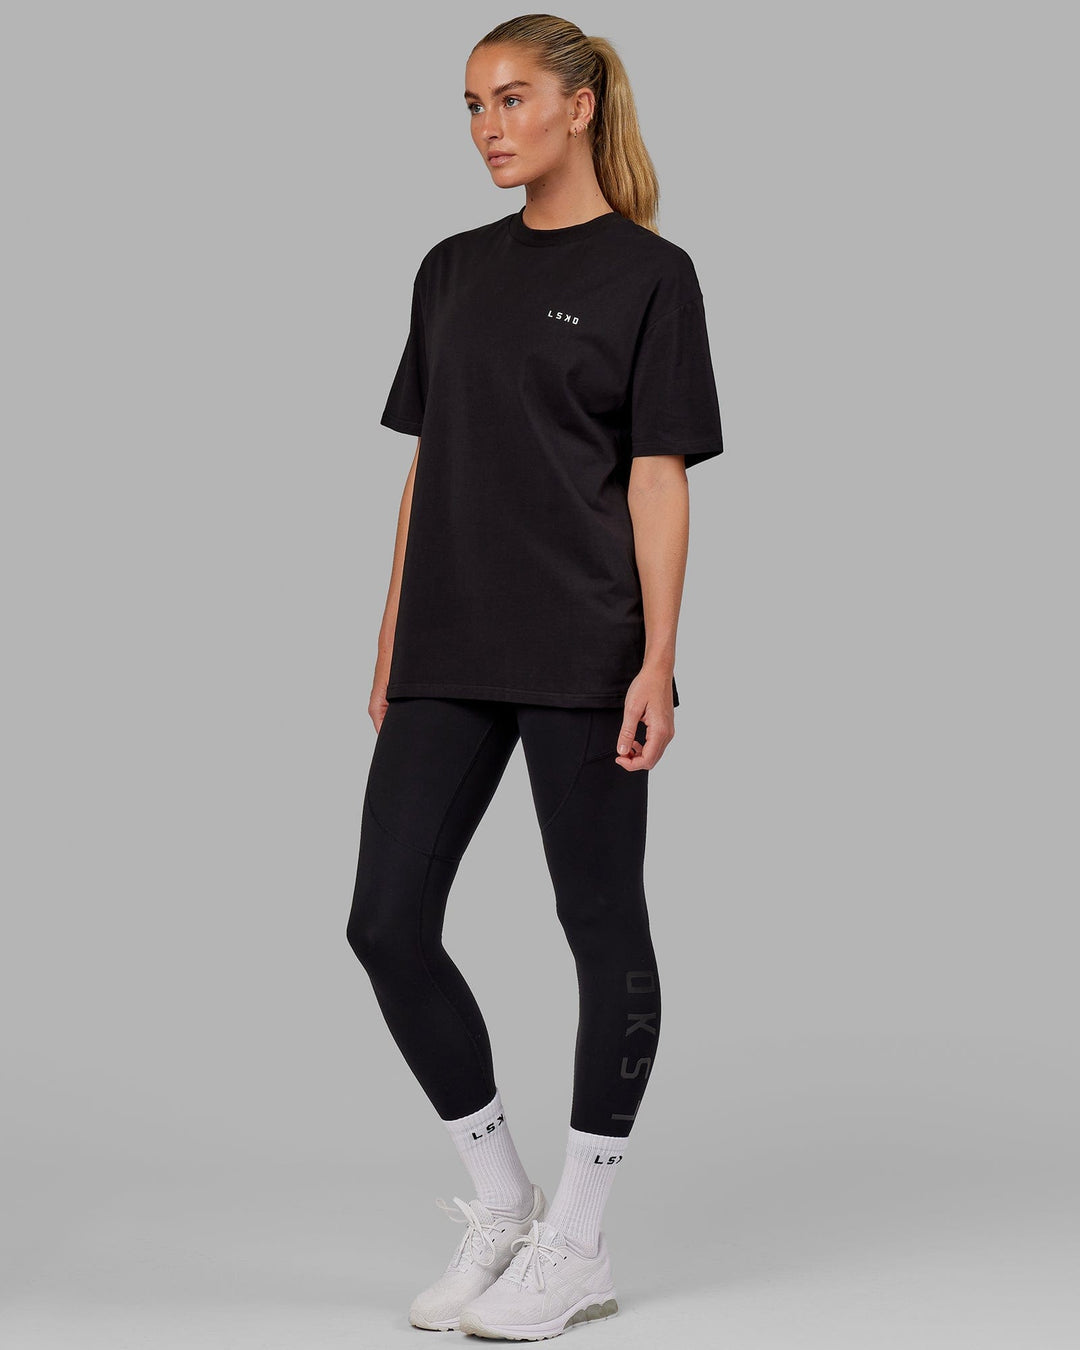 Woman wearing Unisex VS5 FLXCotton Tee Oversize - Black-White